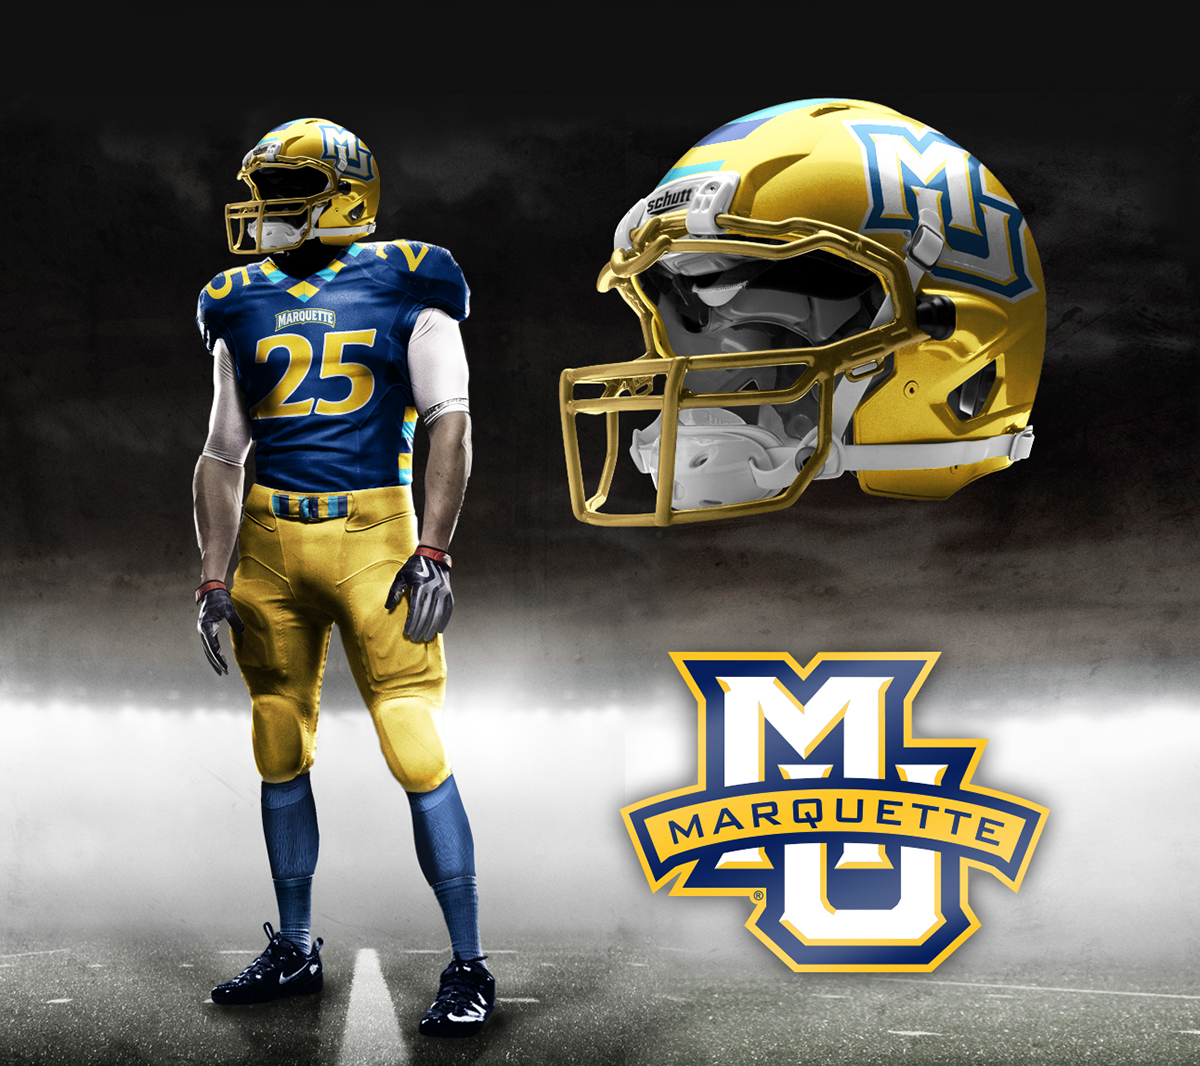 Marquette football uniform concepts on Behance